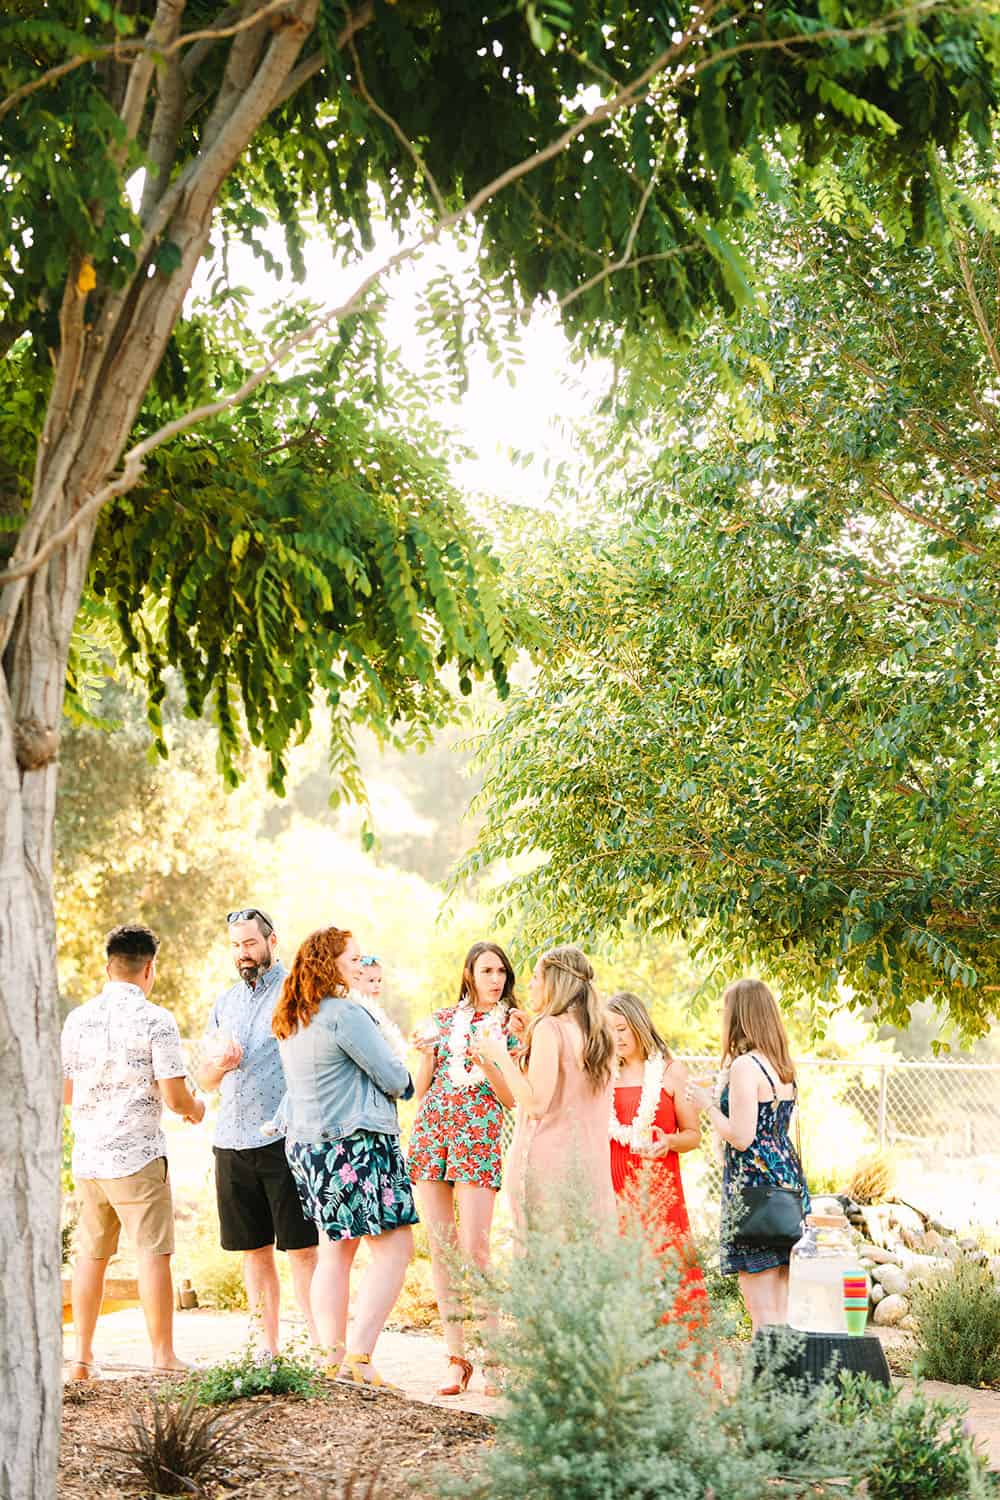 Guests at a backyard, tropical summer party. 